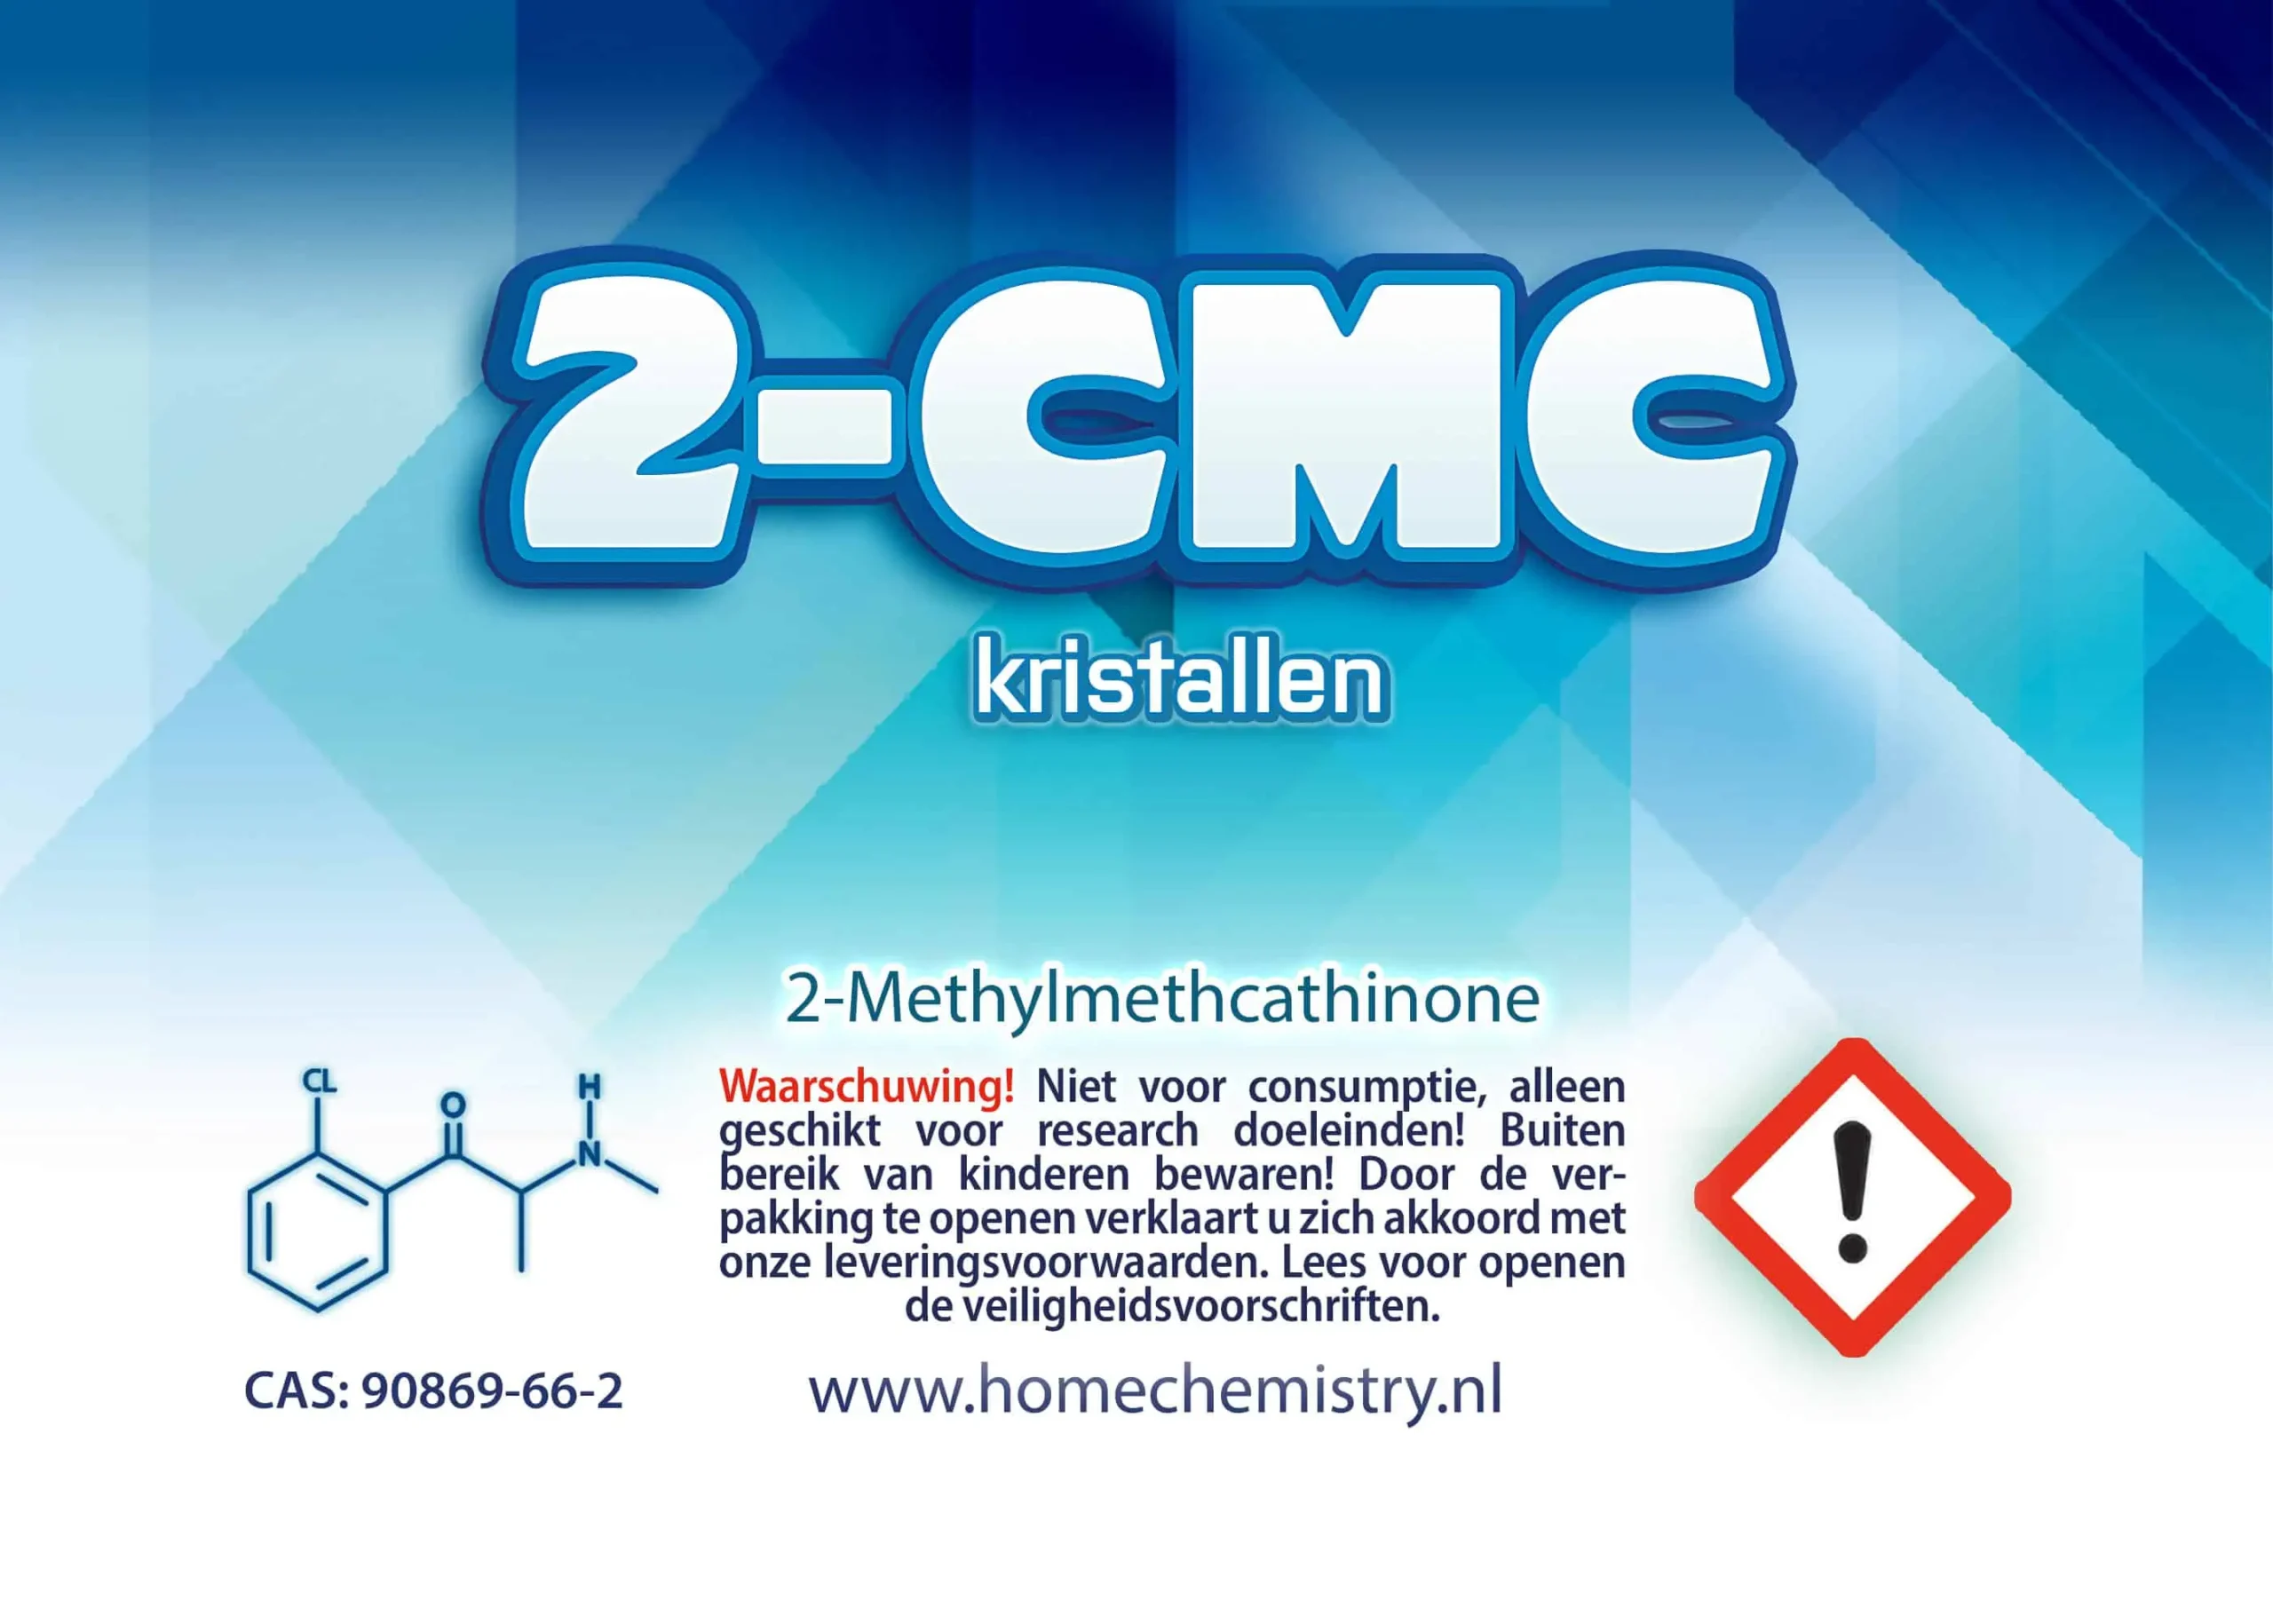 2-CMC Kristallen